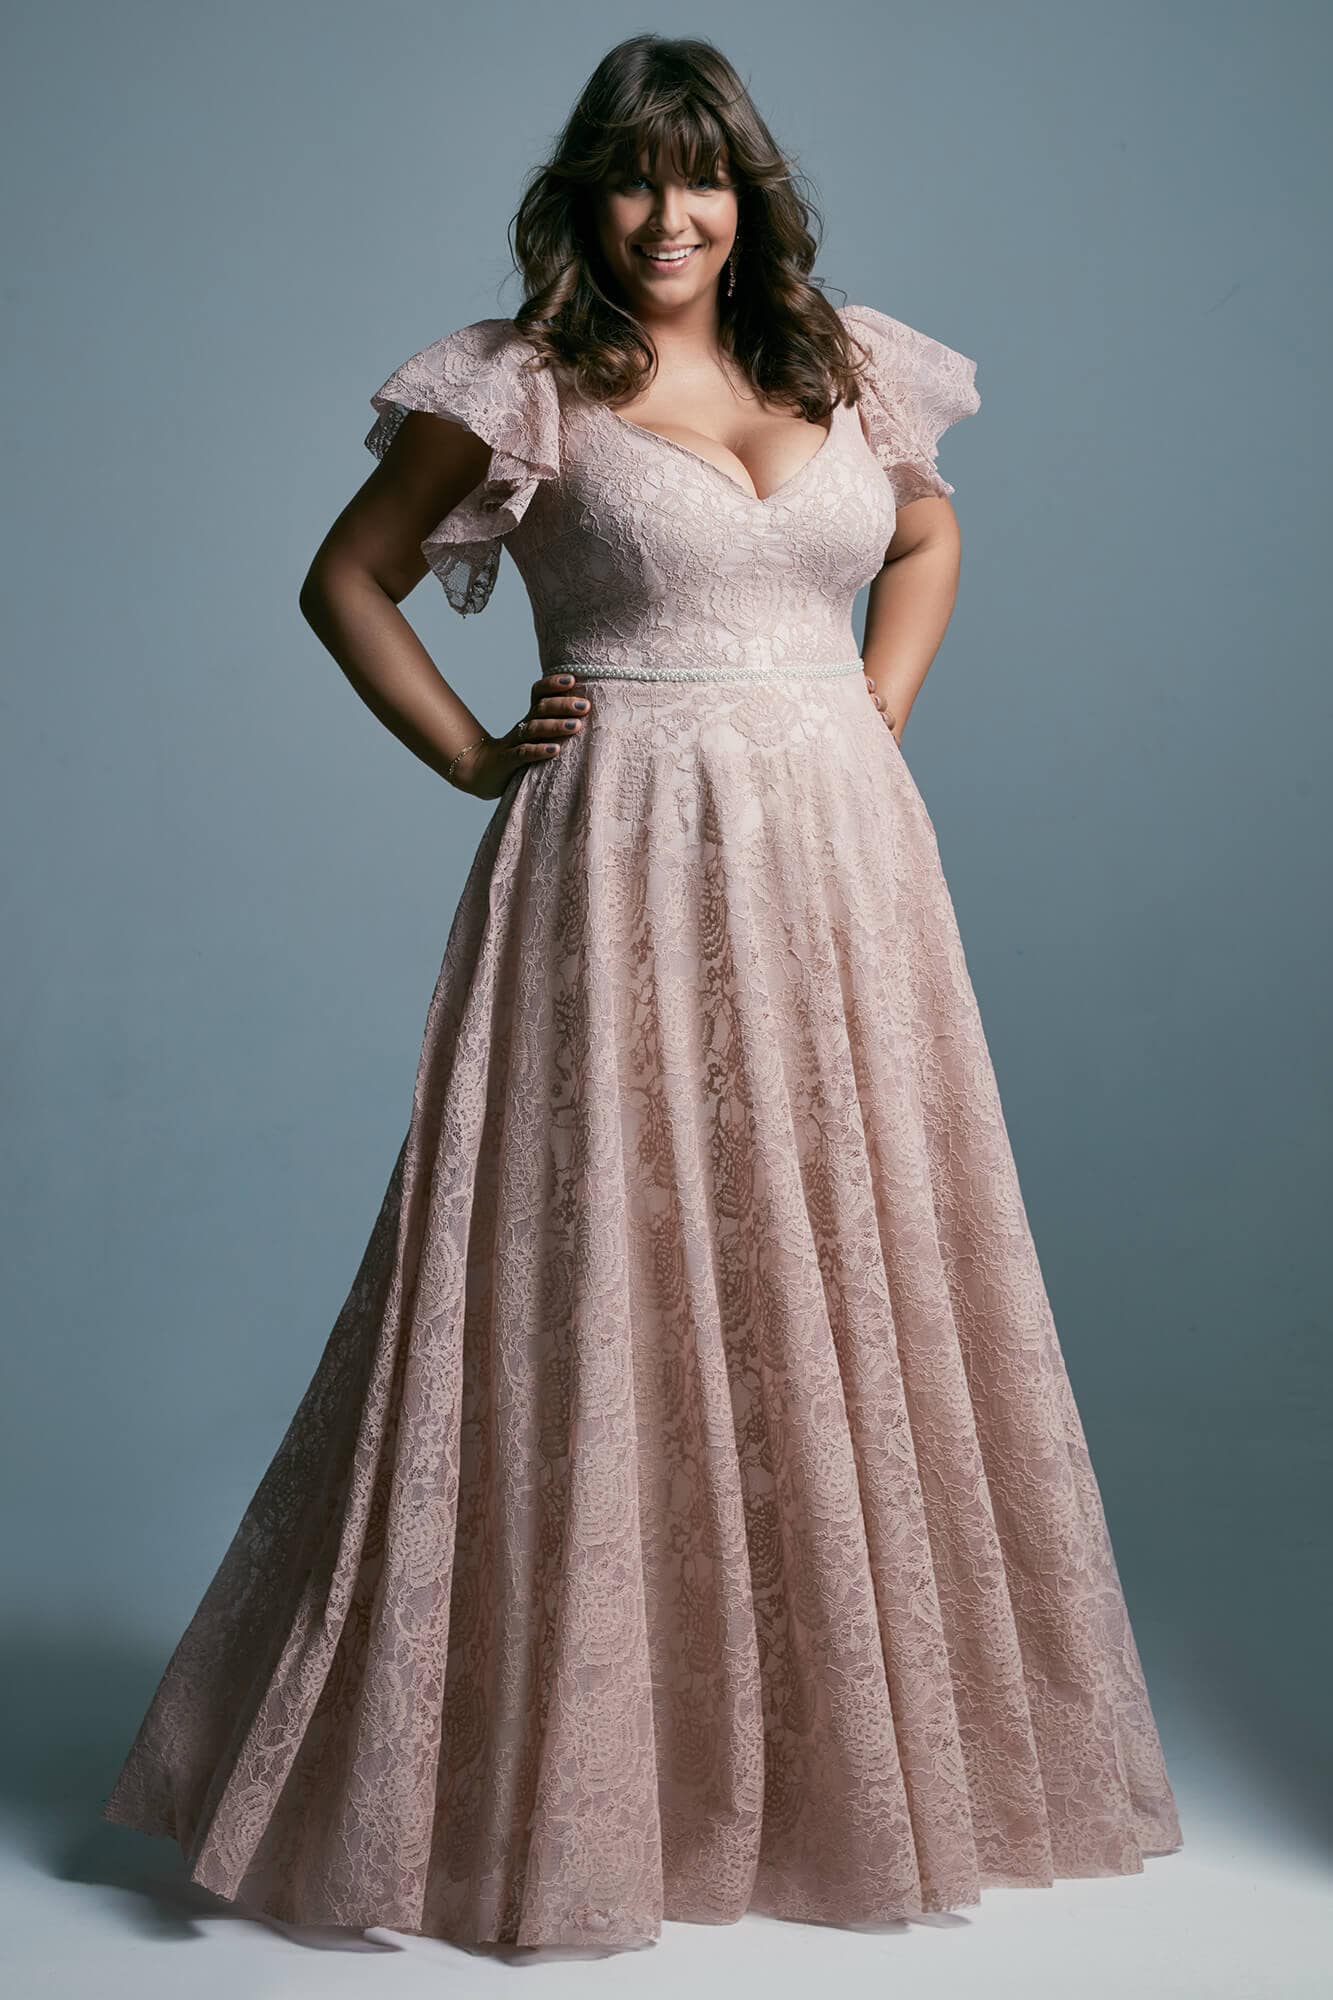 Princess dress - plus pink wedding dress